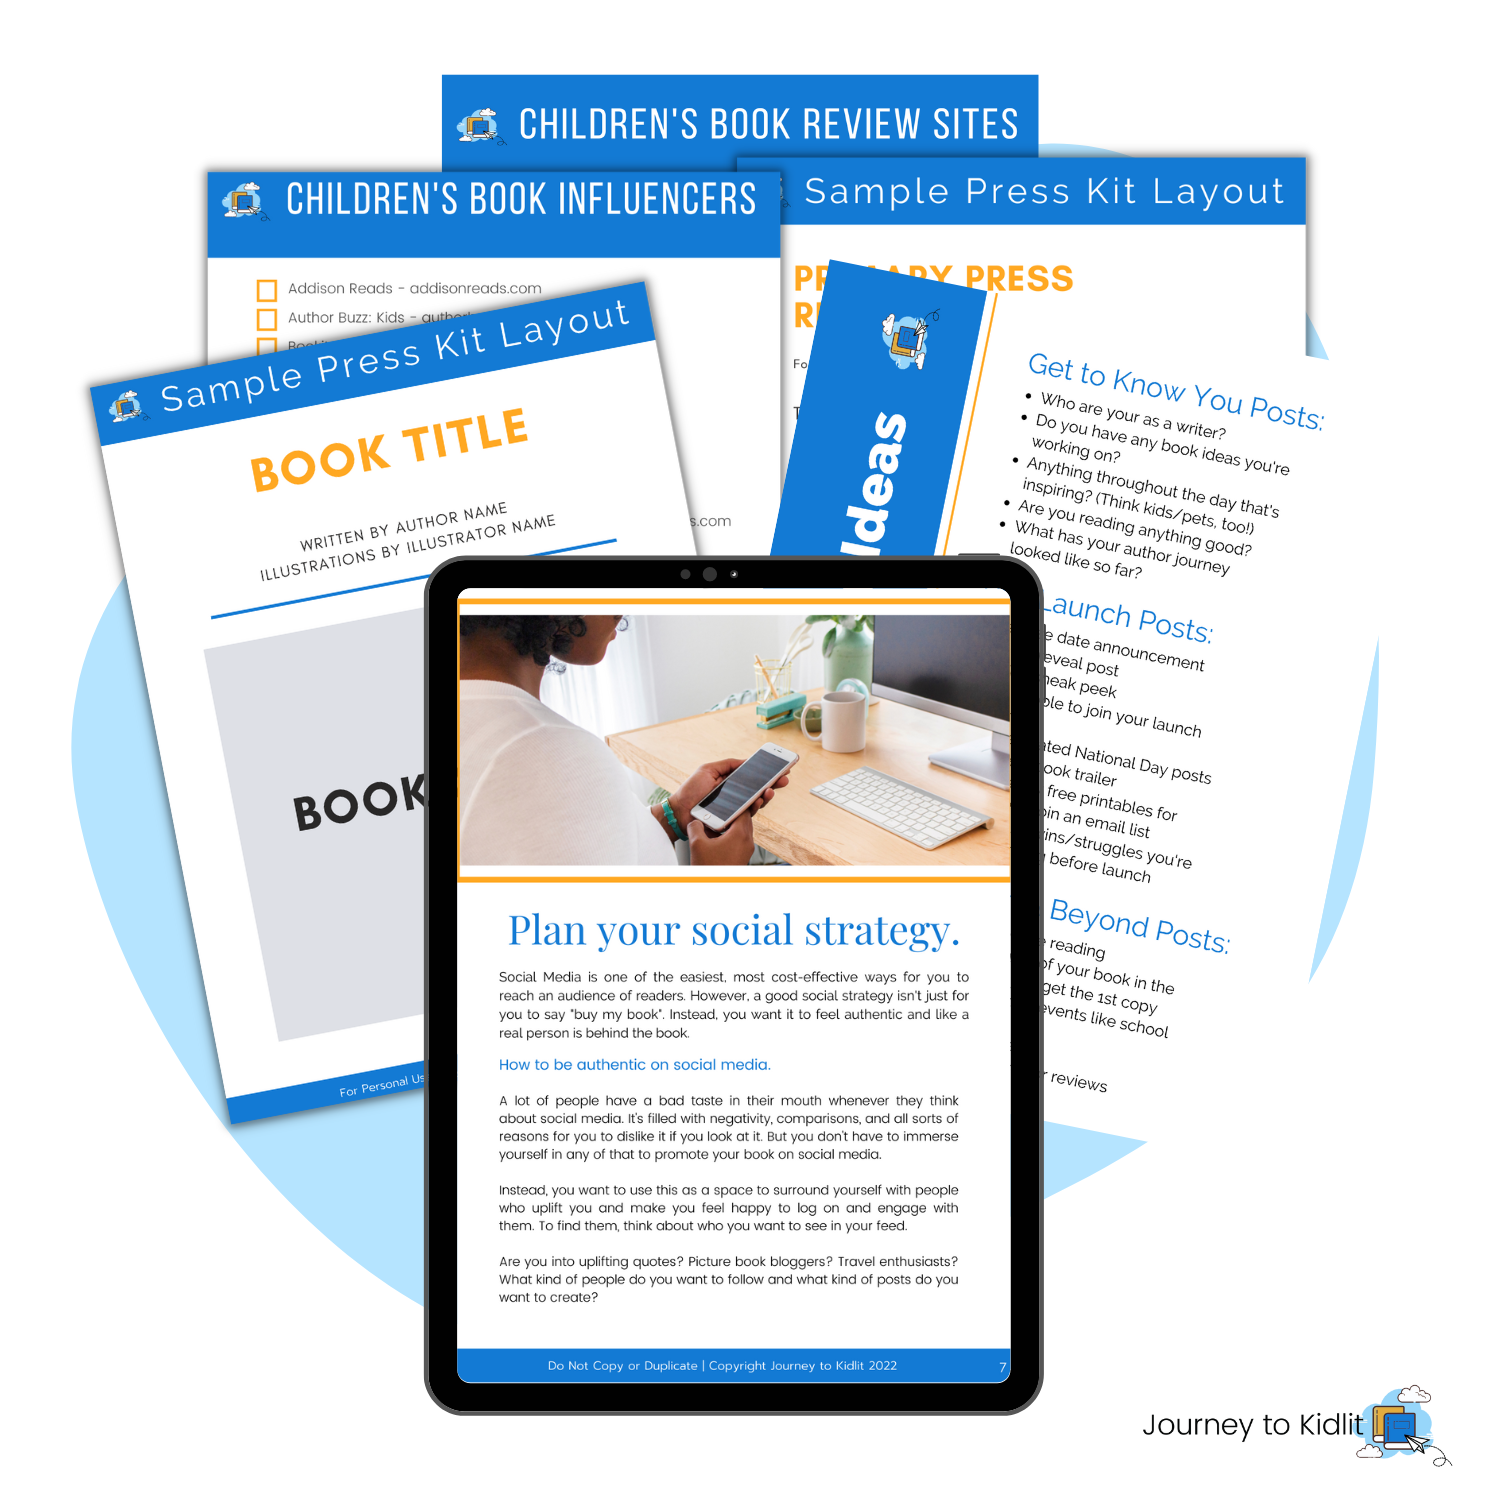 Kidlit Marketing Launch Kit - make your children's book marketing plan.